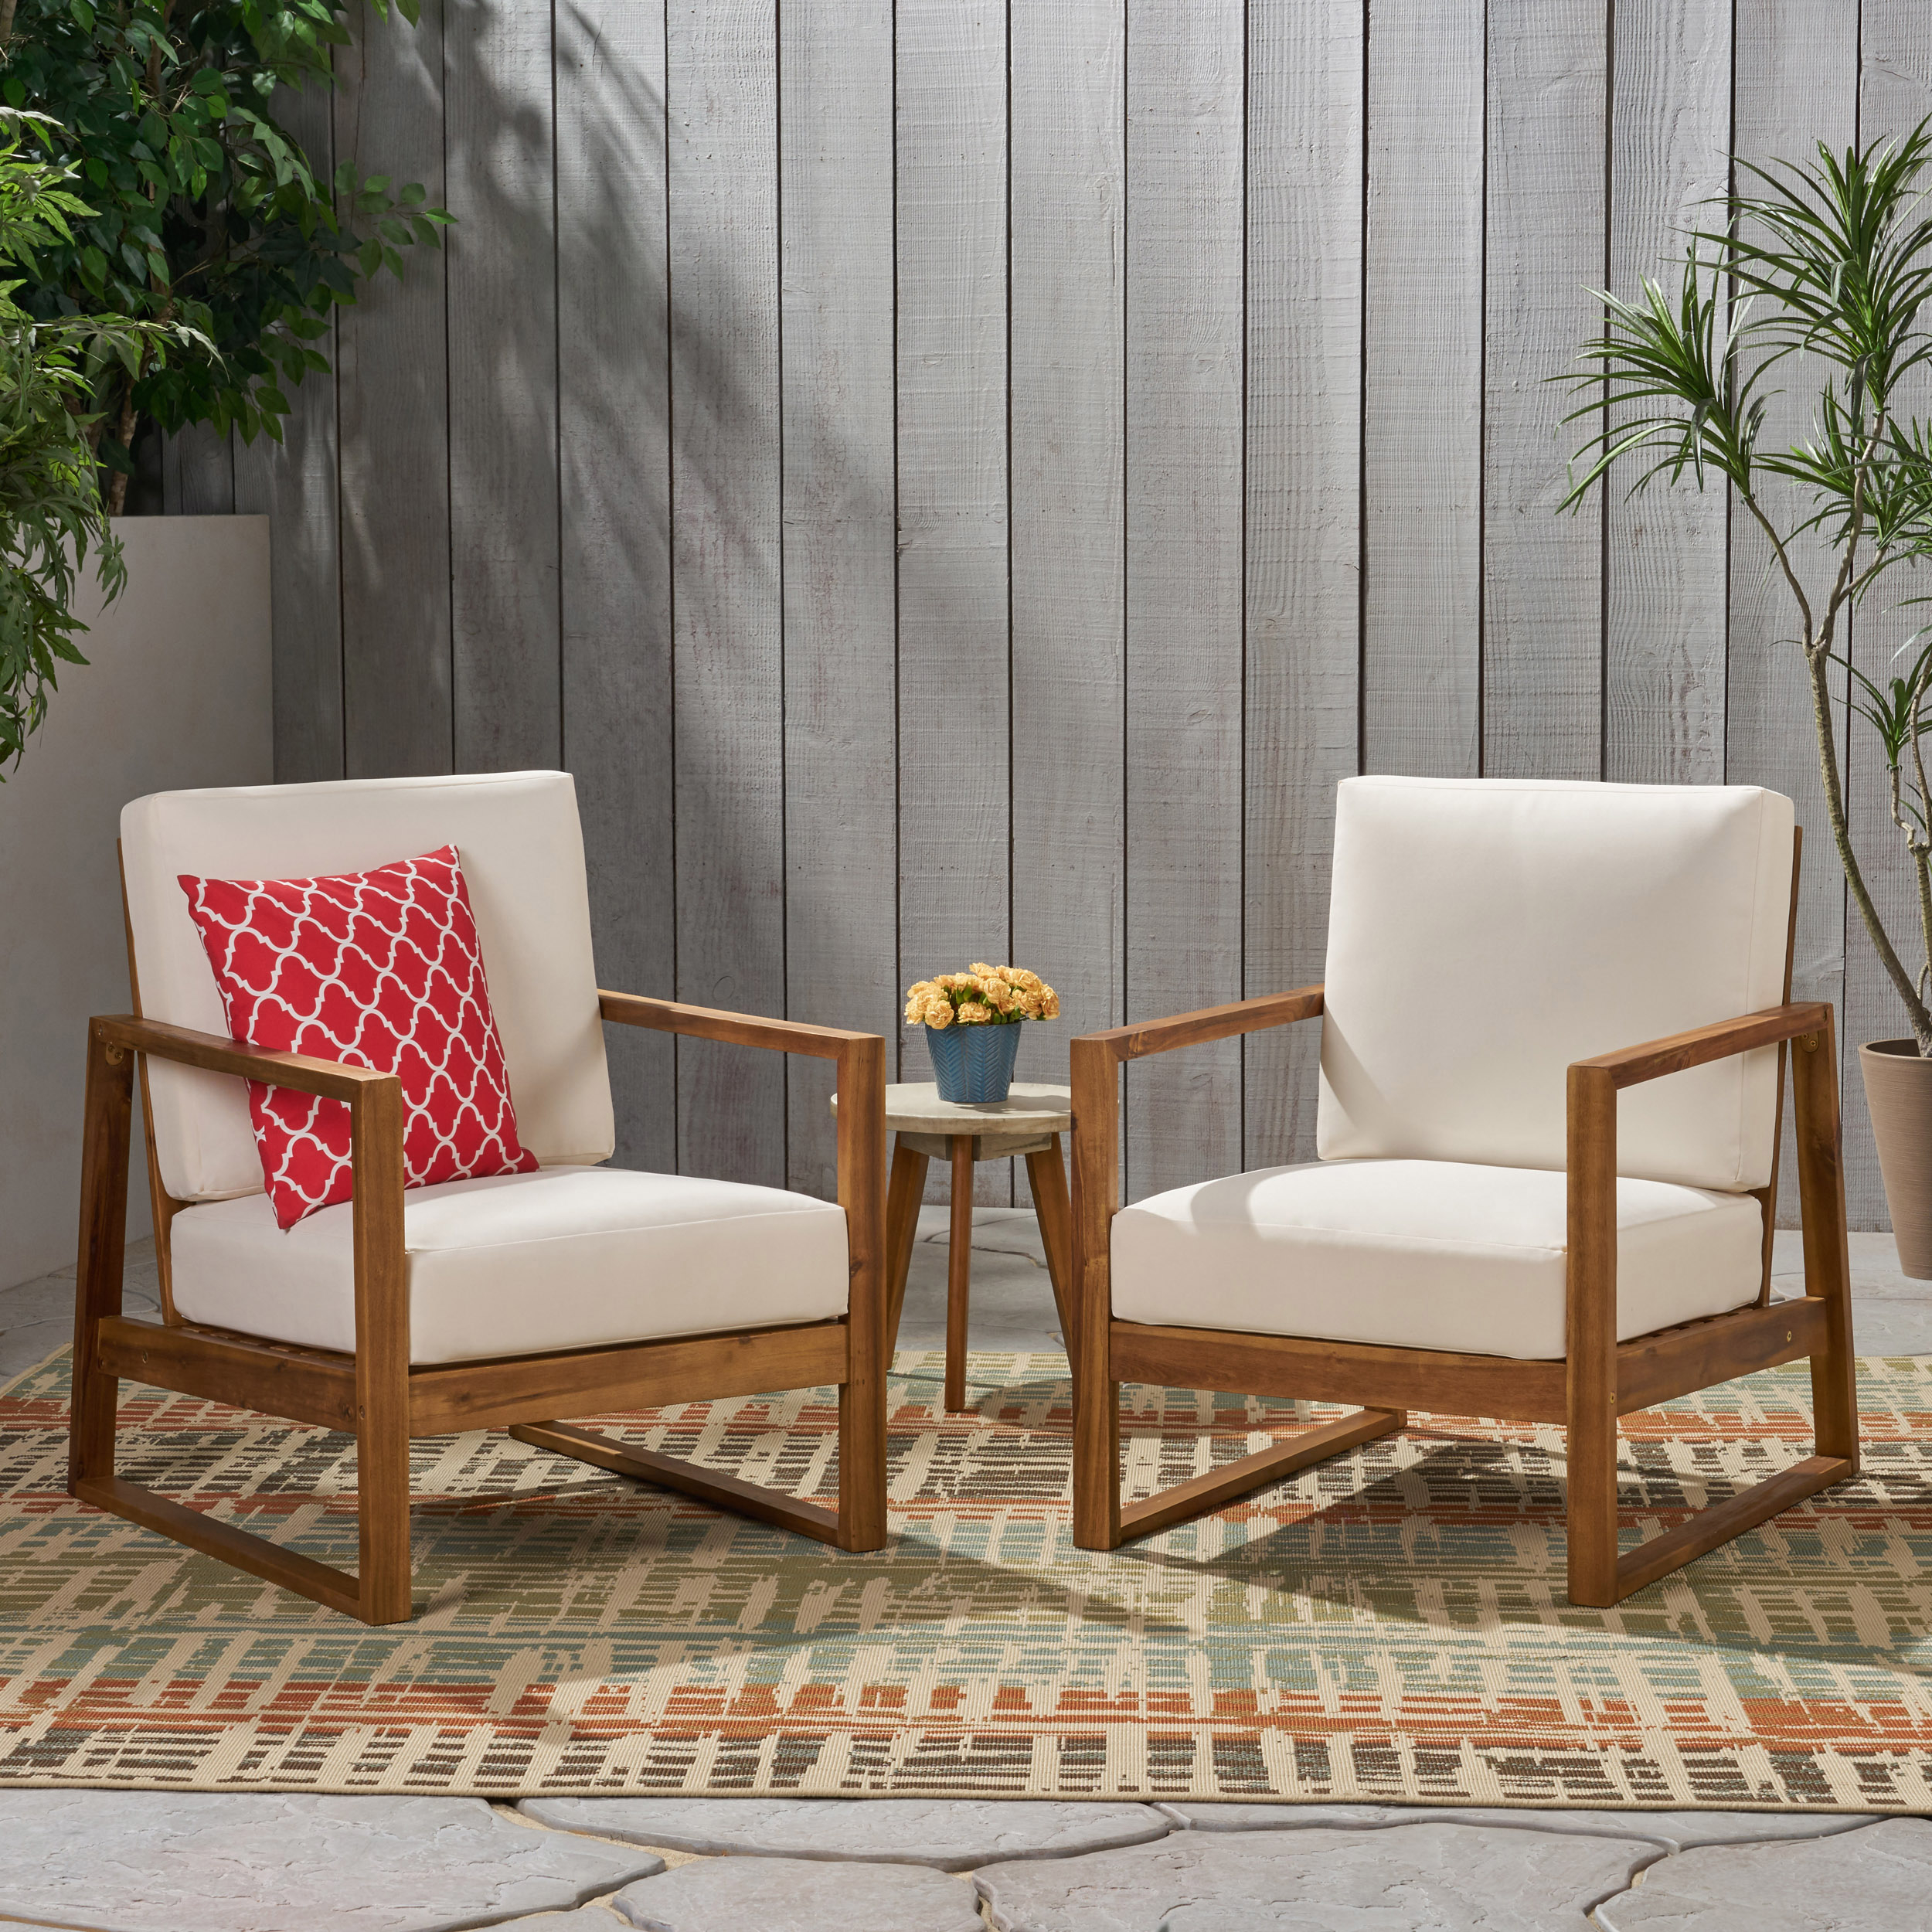 Mavis Outdoor Acacia Wood Club Chair With Cushions (Set Of 2) - Teak Finish, Beige